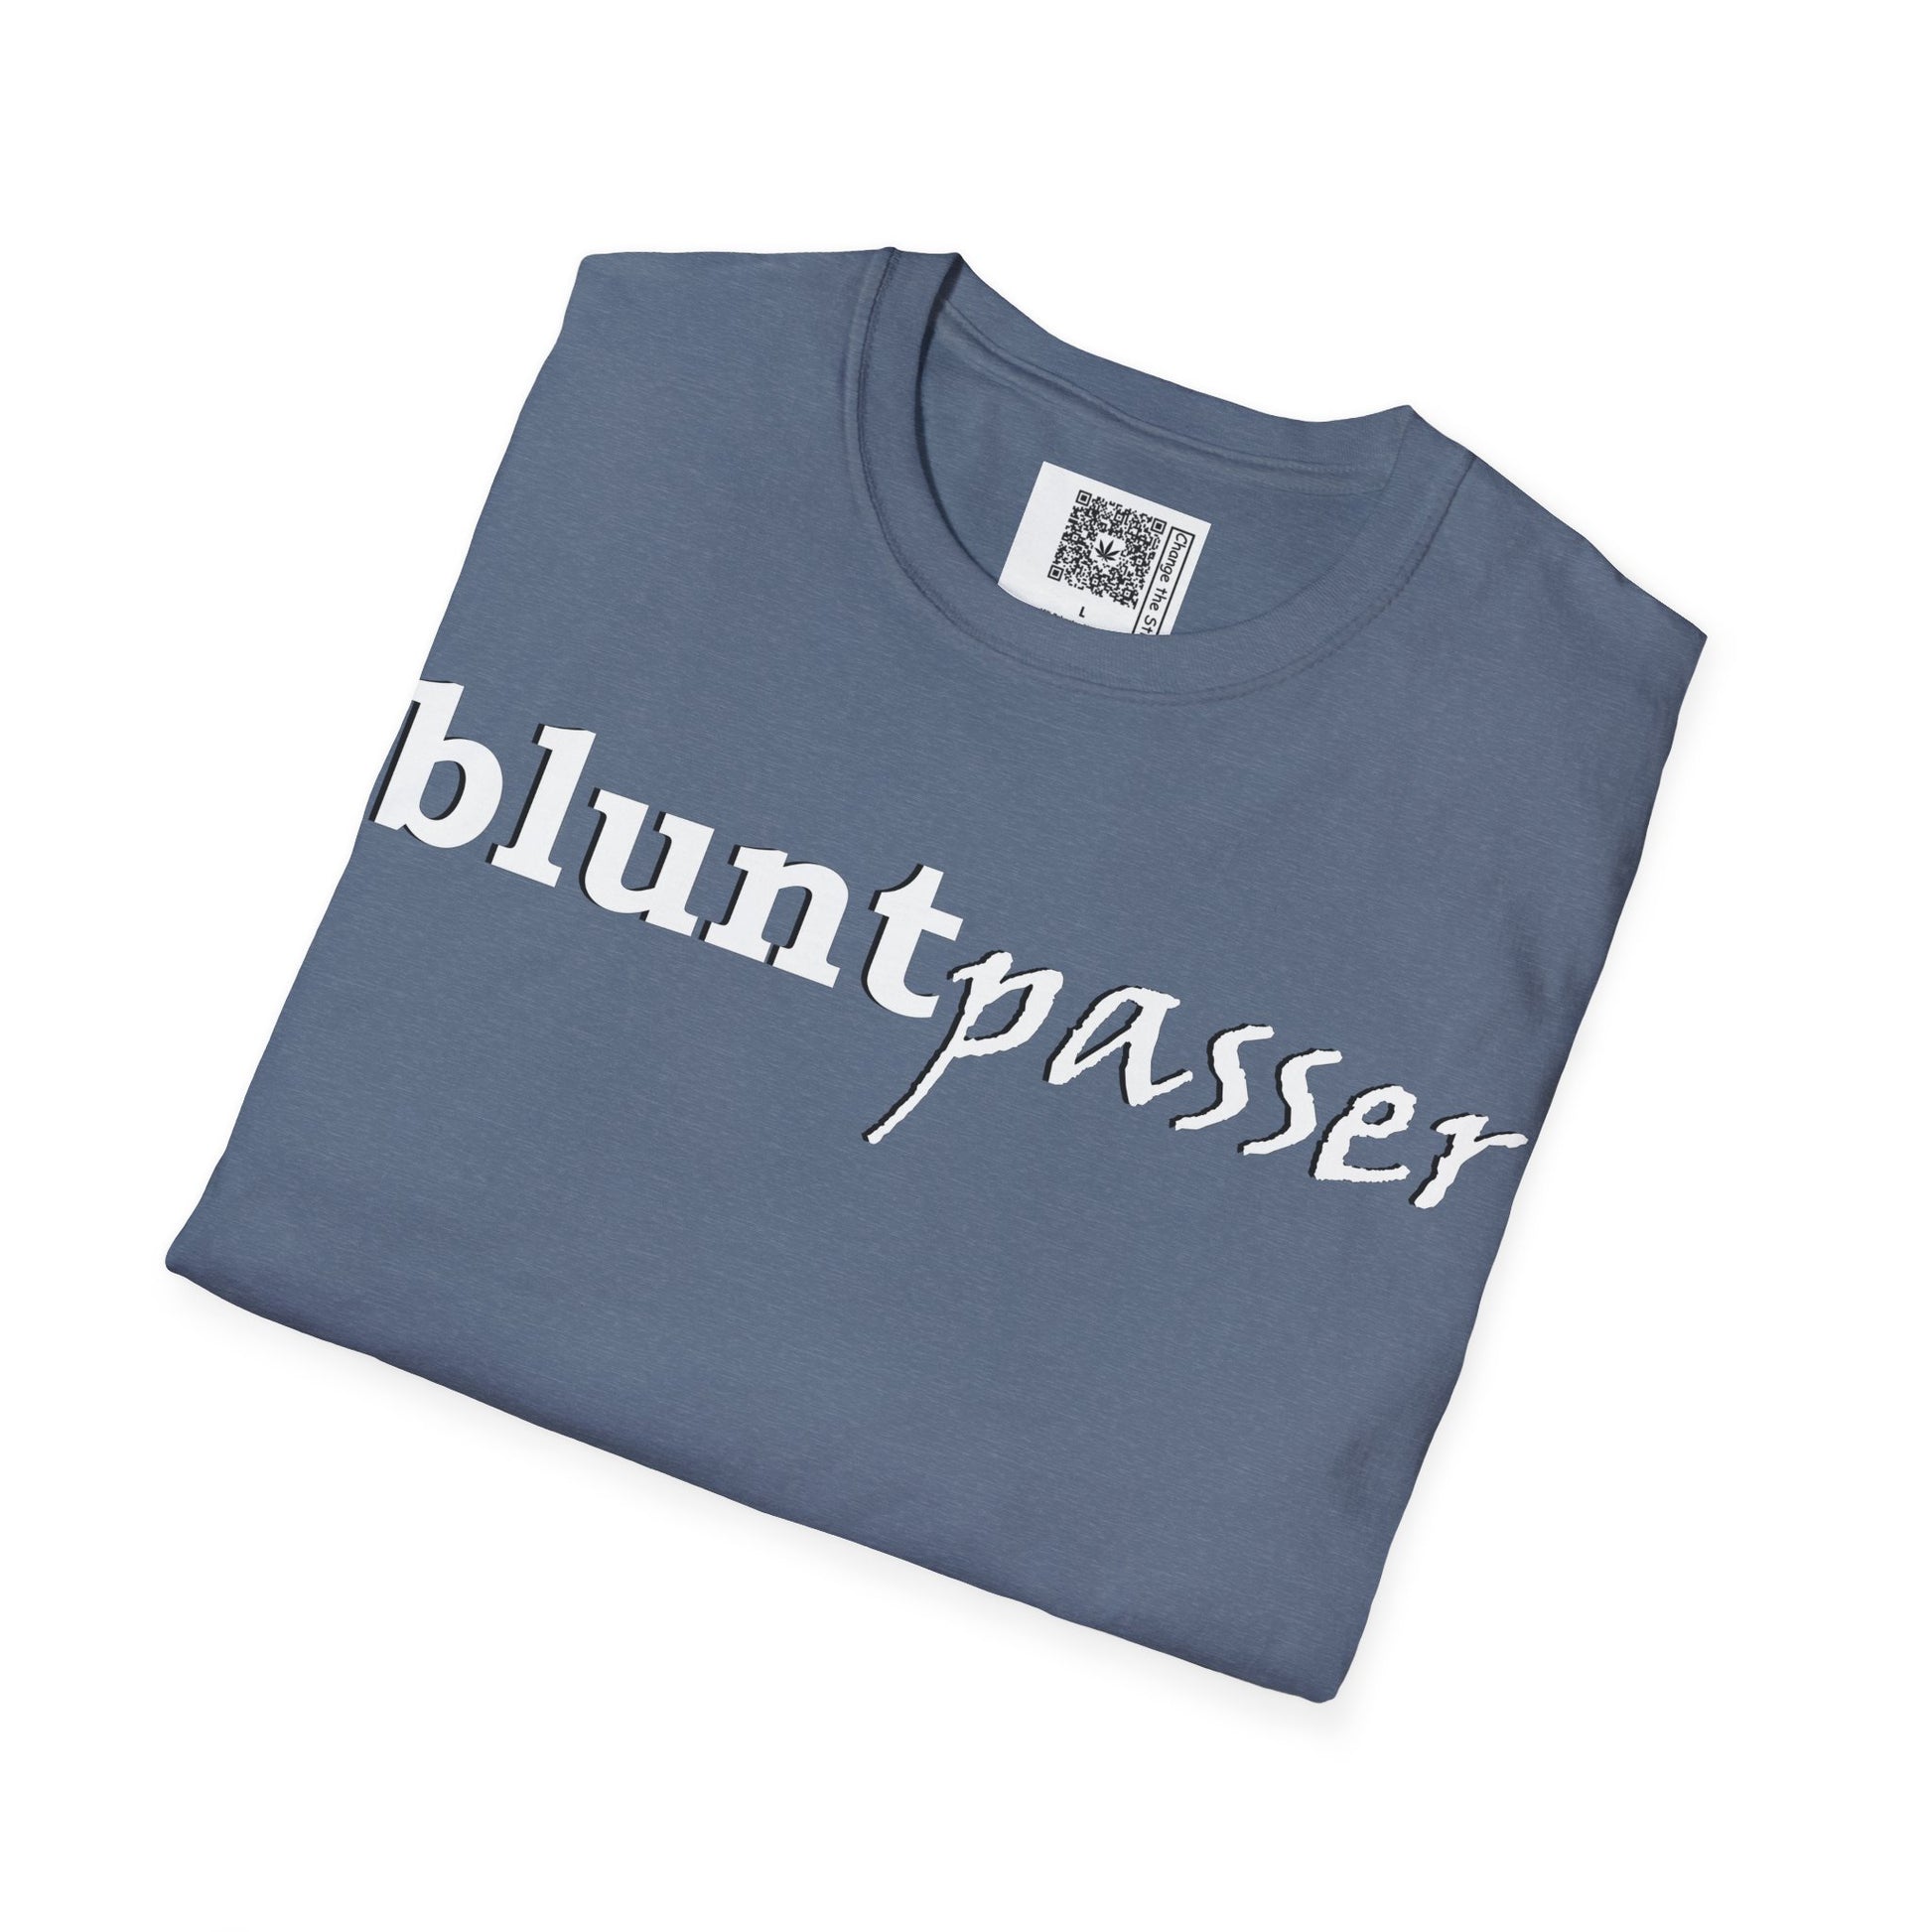 Change the Stigma, Heather Indigo color, shirt saying "blunt passer", Folded, Qr code is shown